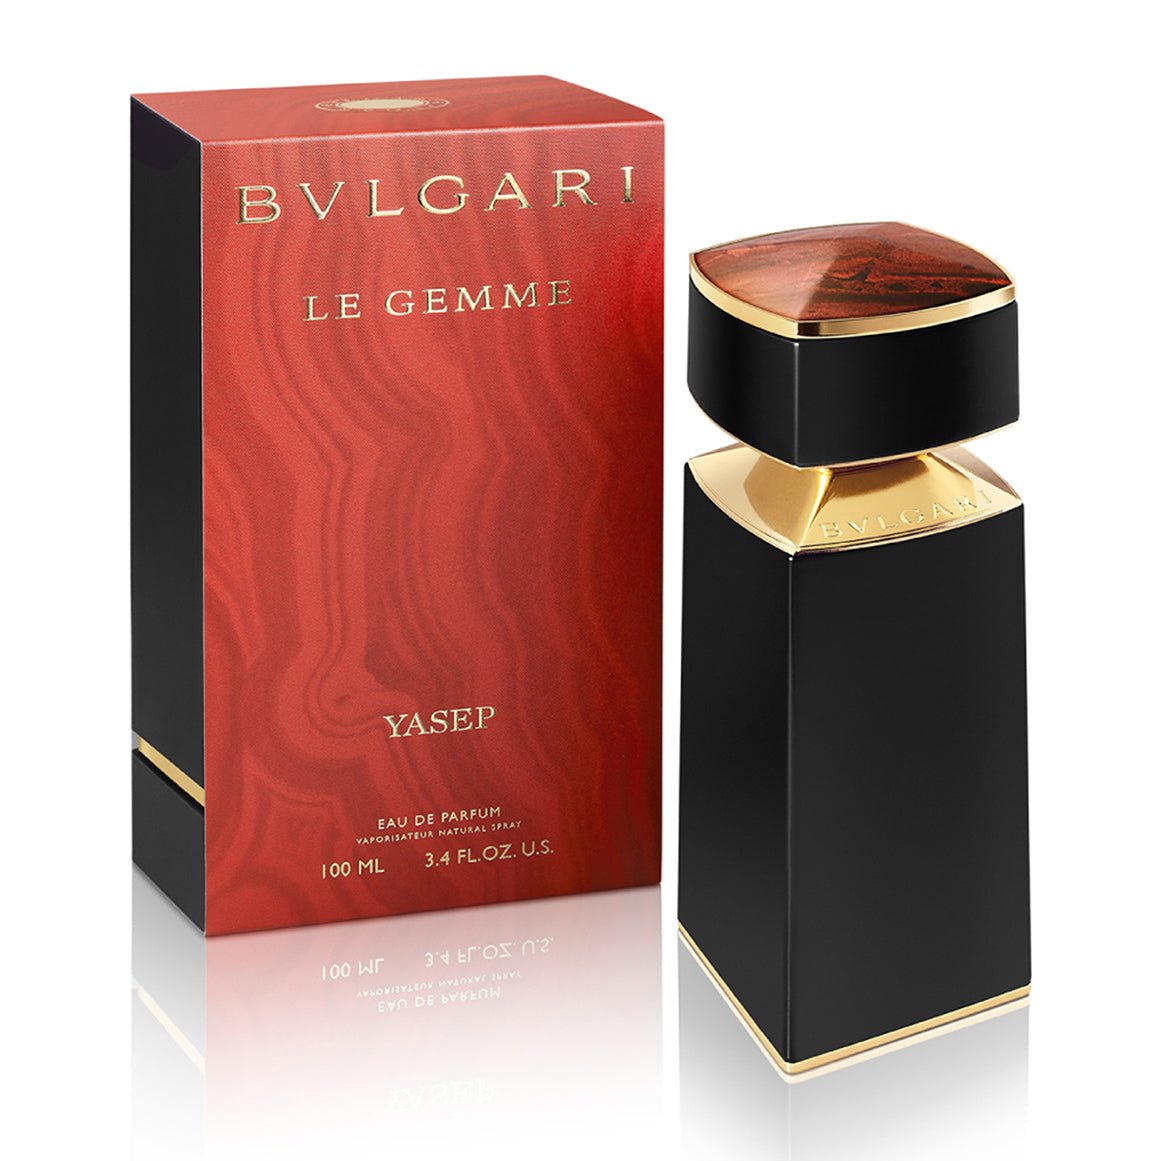 Bvlgari Le Gemme Yasep EDP | My Perfume Shop Australia